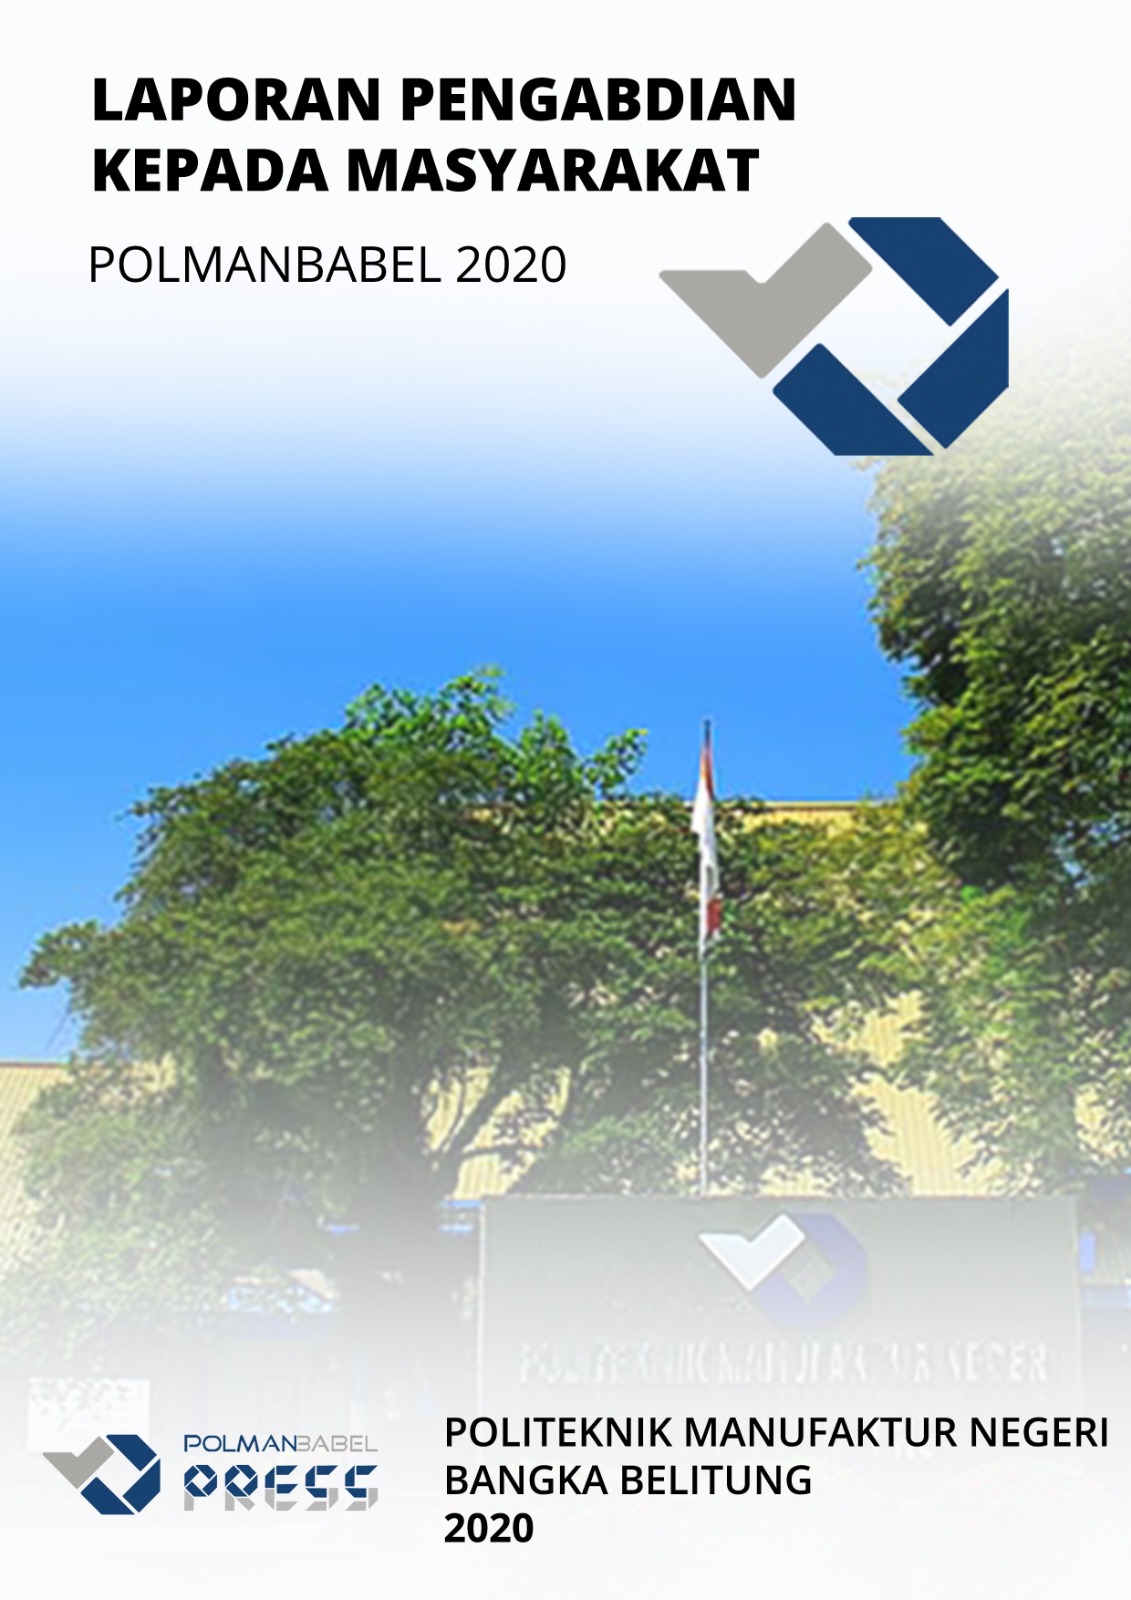 Polmanbabel Community Service Report 2020